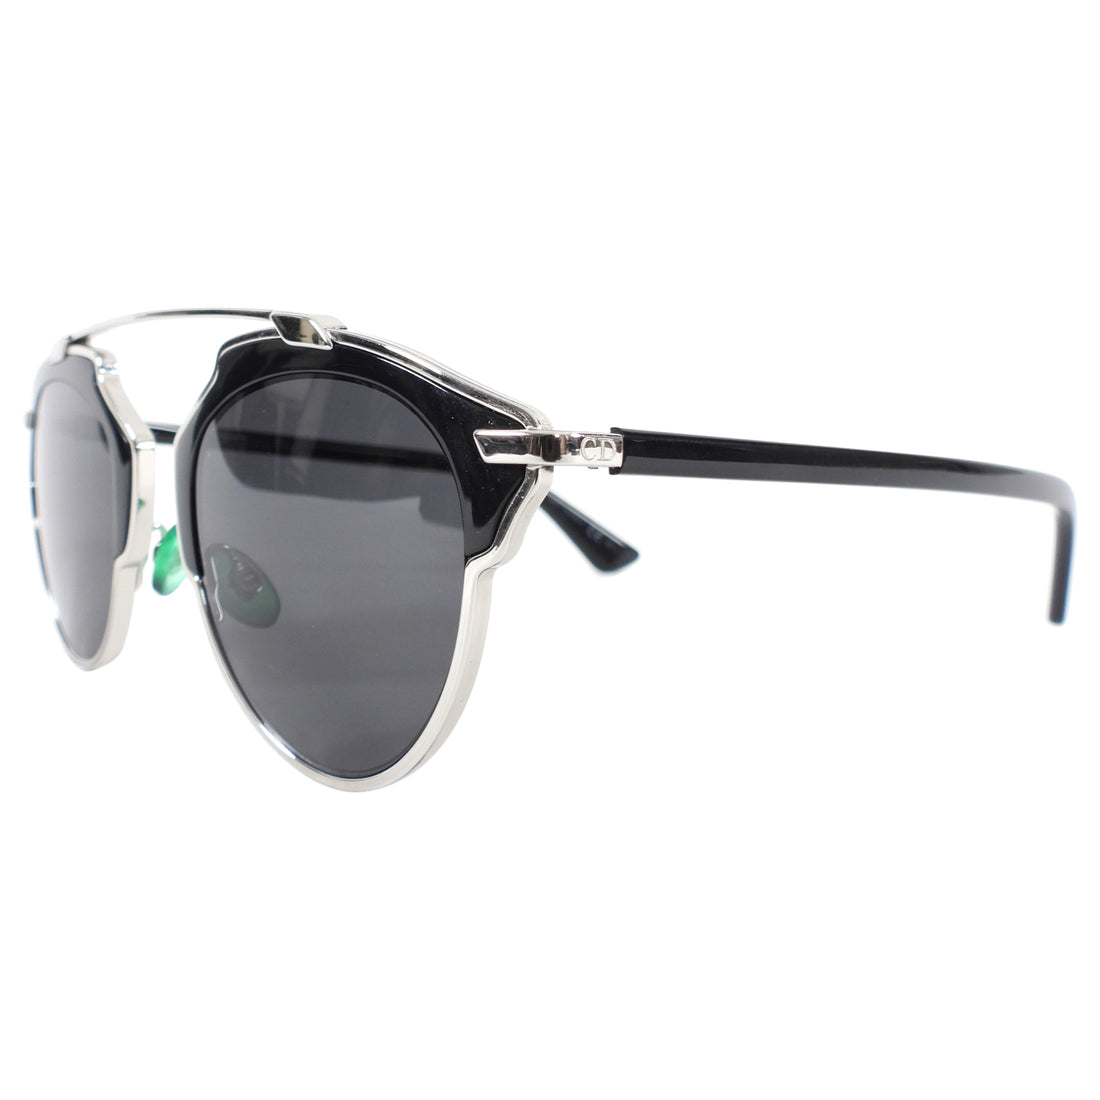 Dior So Real Black and Silver Sunglasses